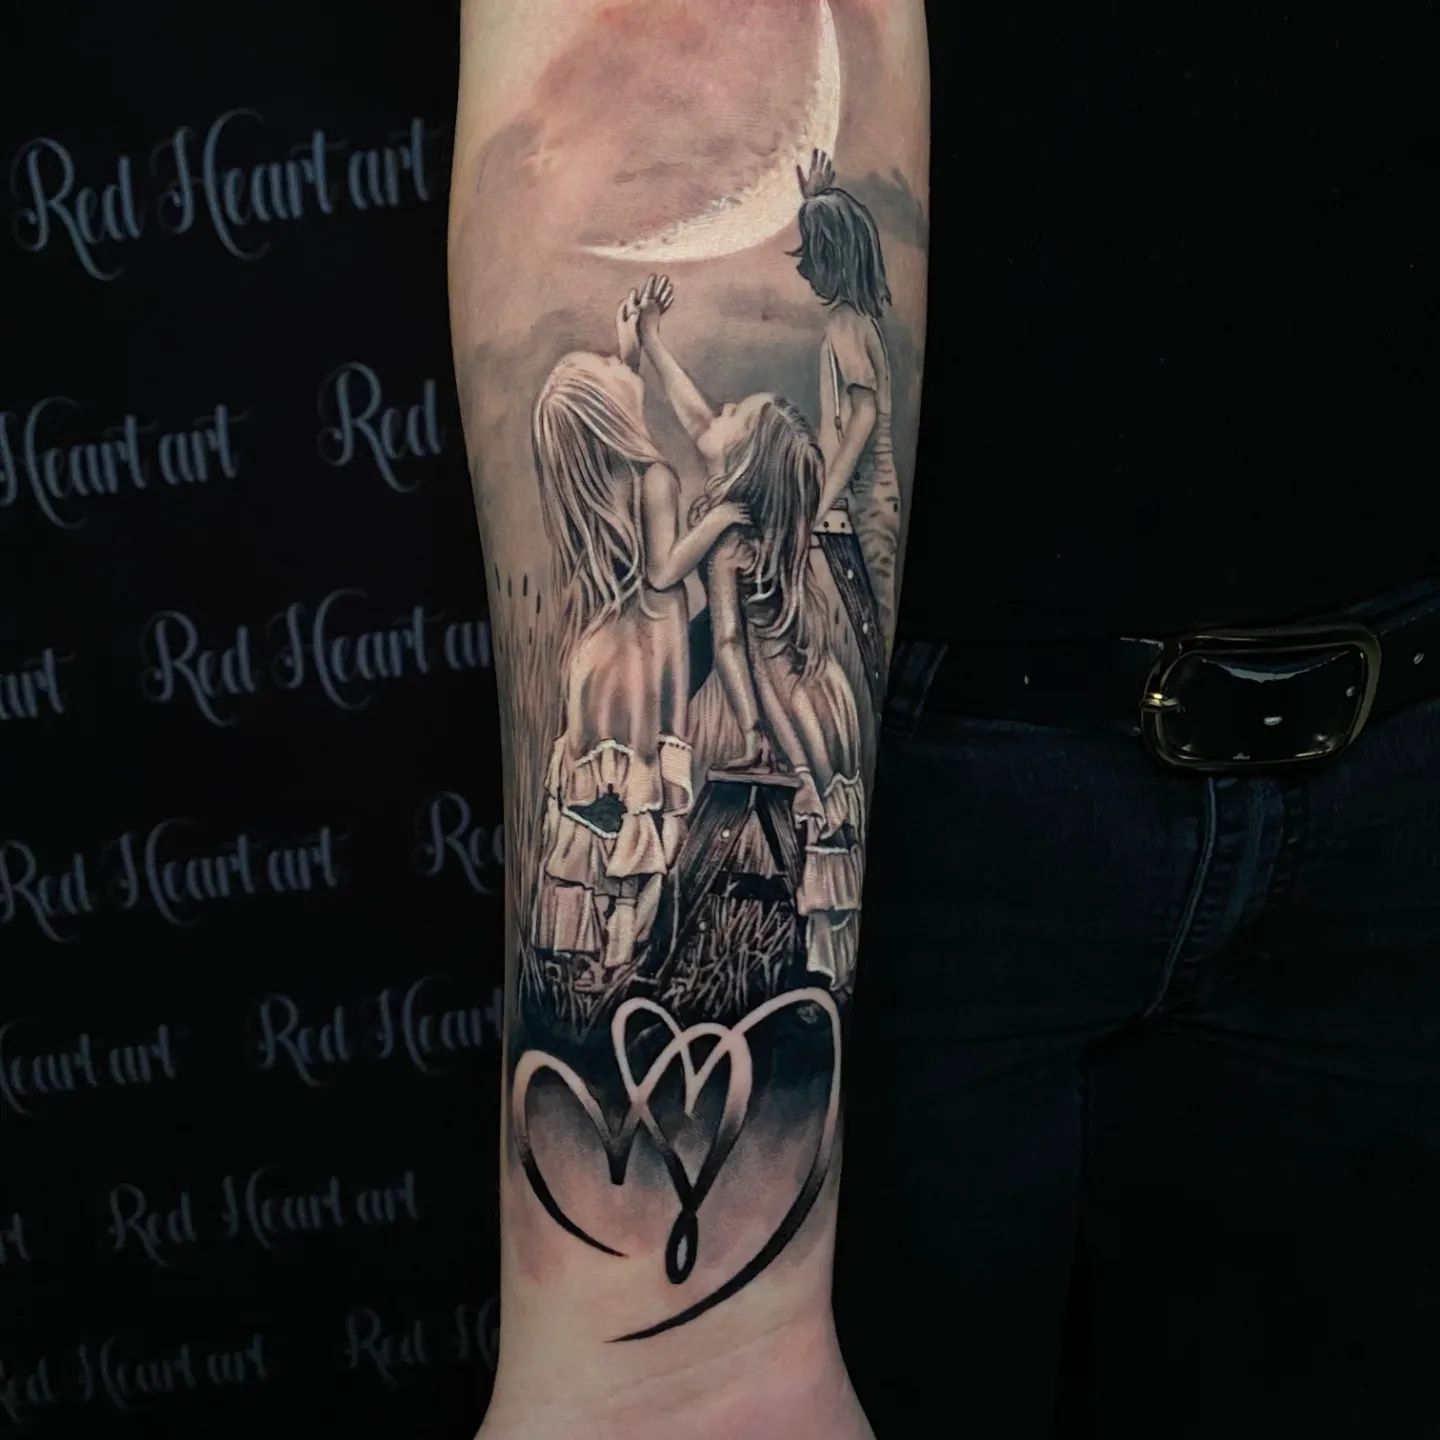 Tetovaža Renate Bohinc. Vir: Instagram